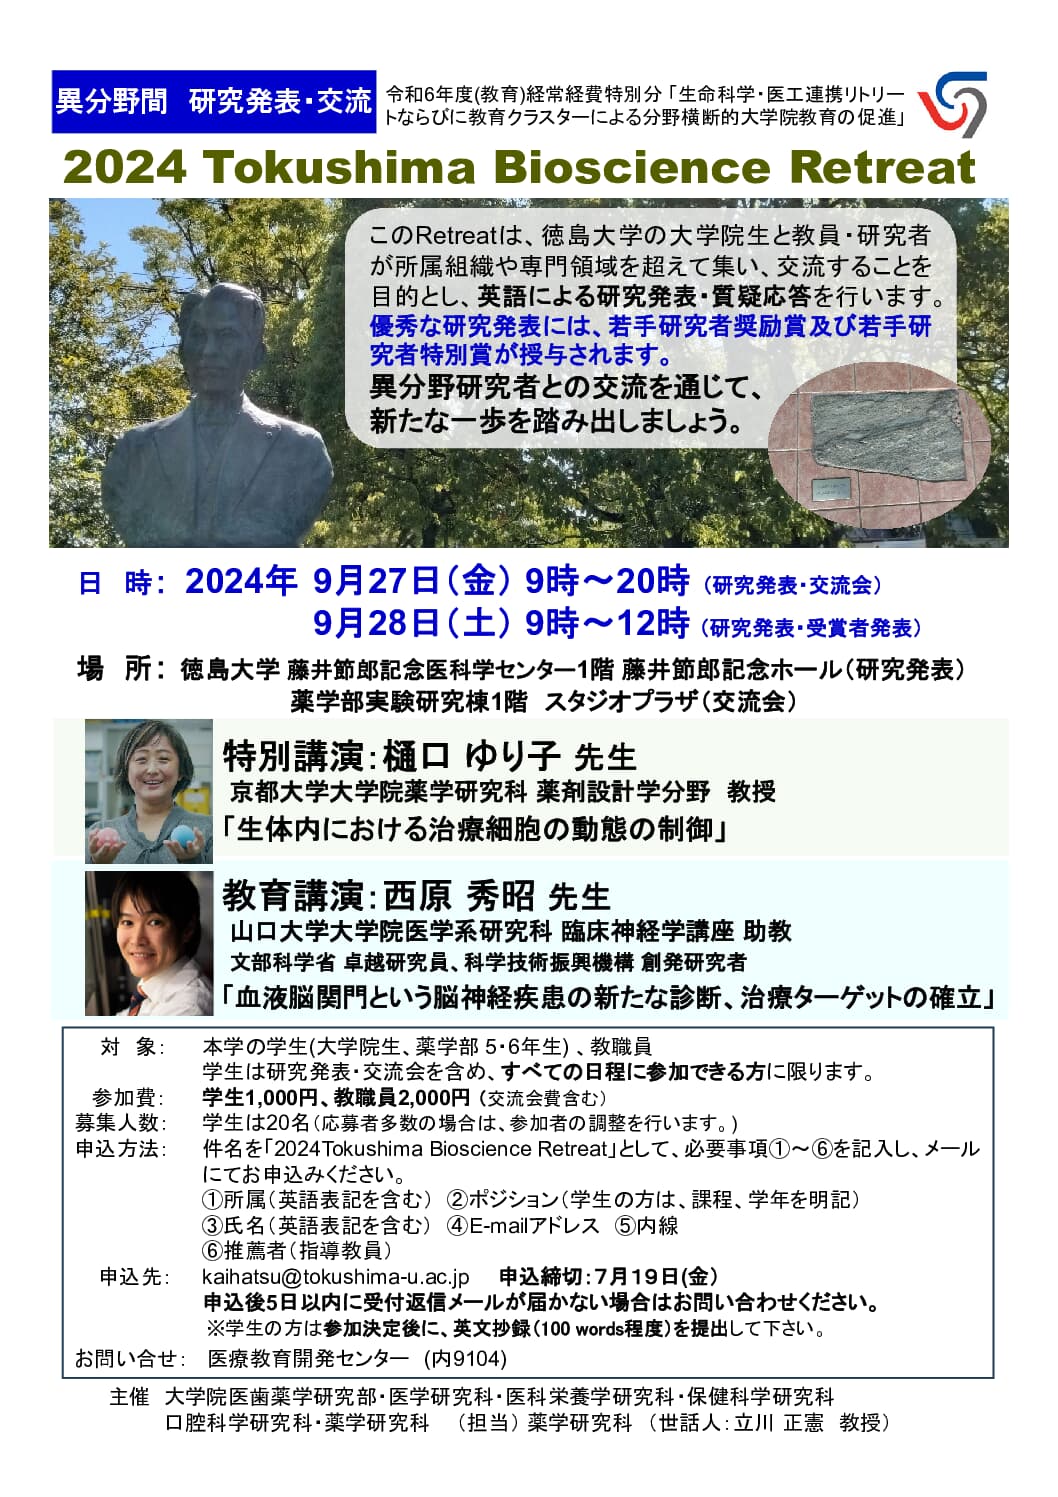 2024 Tokushima Bioscience Retreat 参加者募集のお知らせ